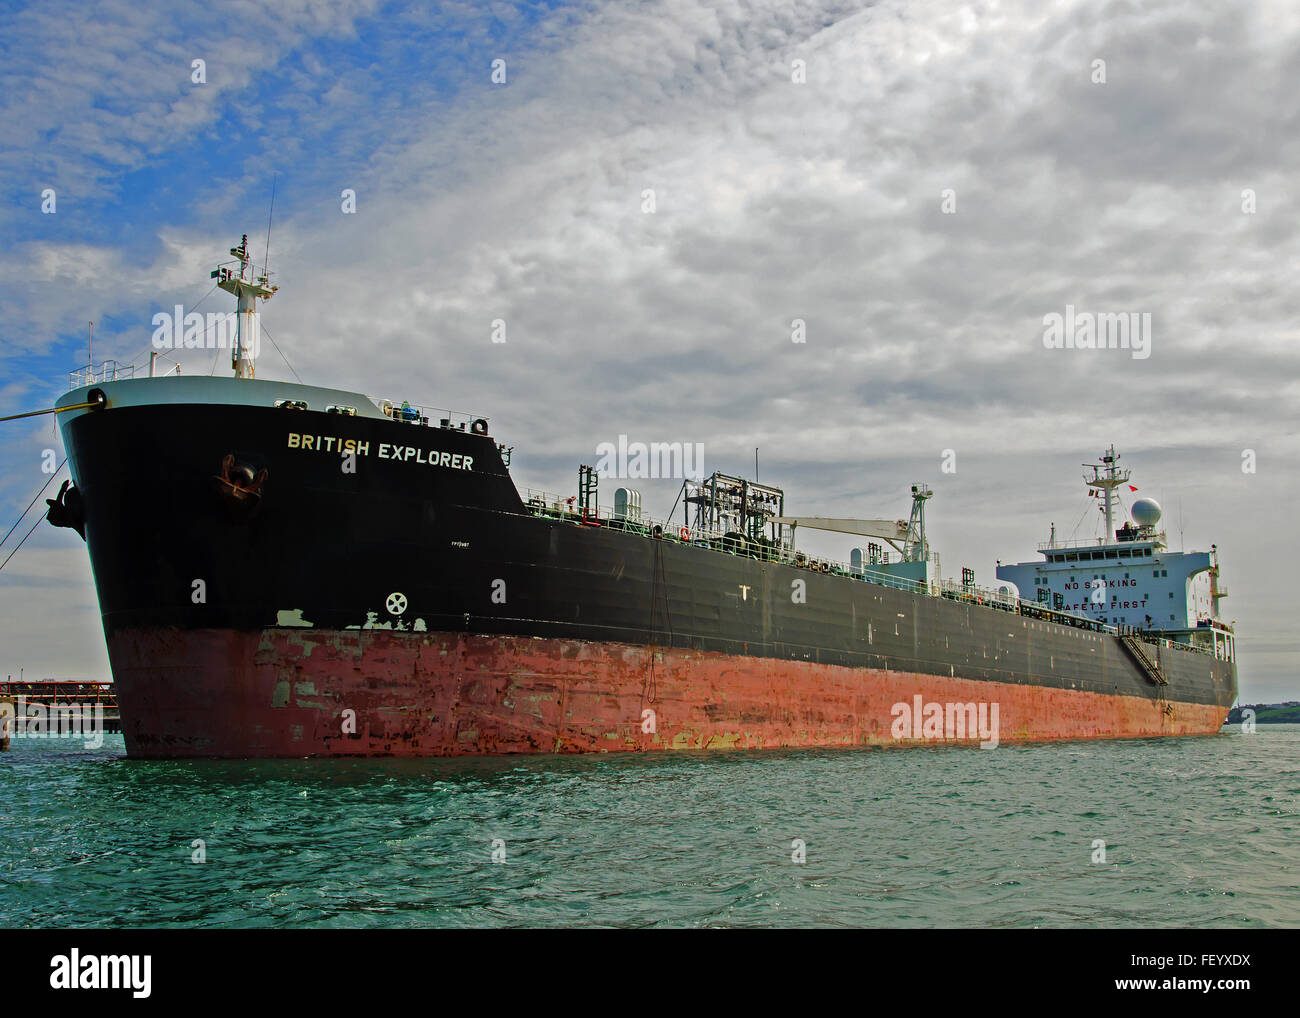 Huge crude oil tanker 'M/V British Explorer' moored at Whitegate Oil Terminal, Cork Harbour, Cobh, Port of Cork, Ireland. Stock Photo